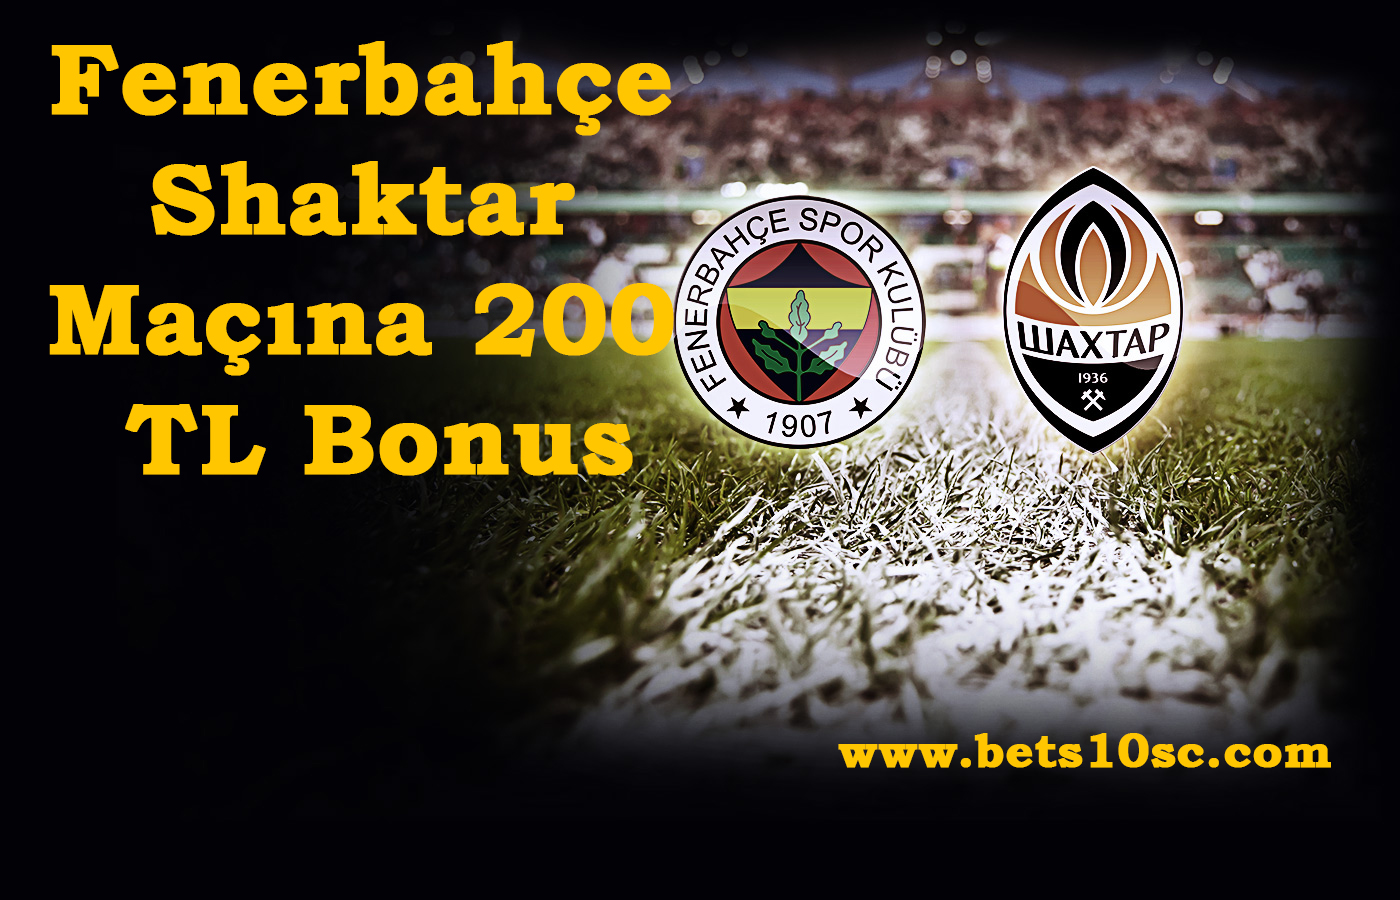 Fenerbahçe Shaktar Maçına 200 TL Bonus